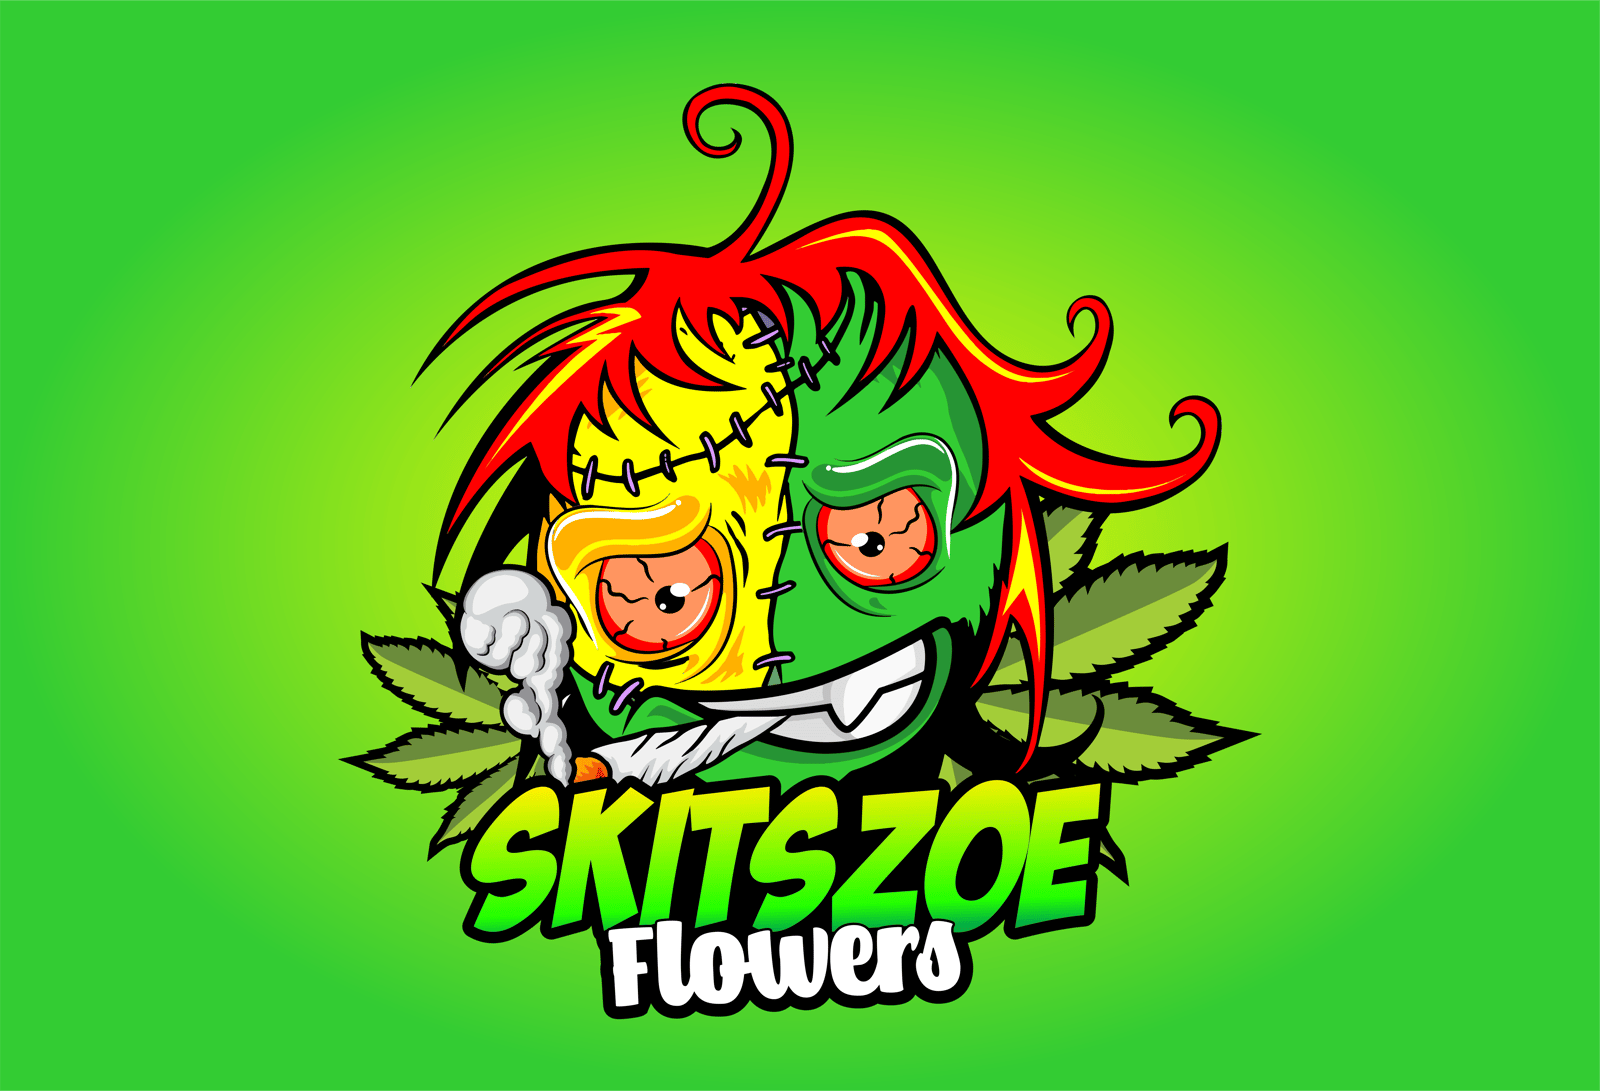 SkitsZoe LLC